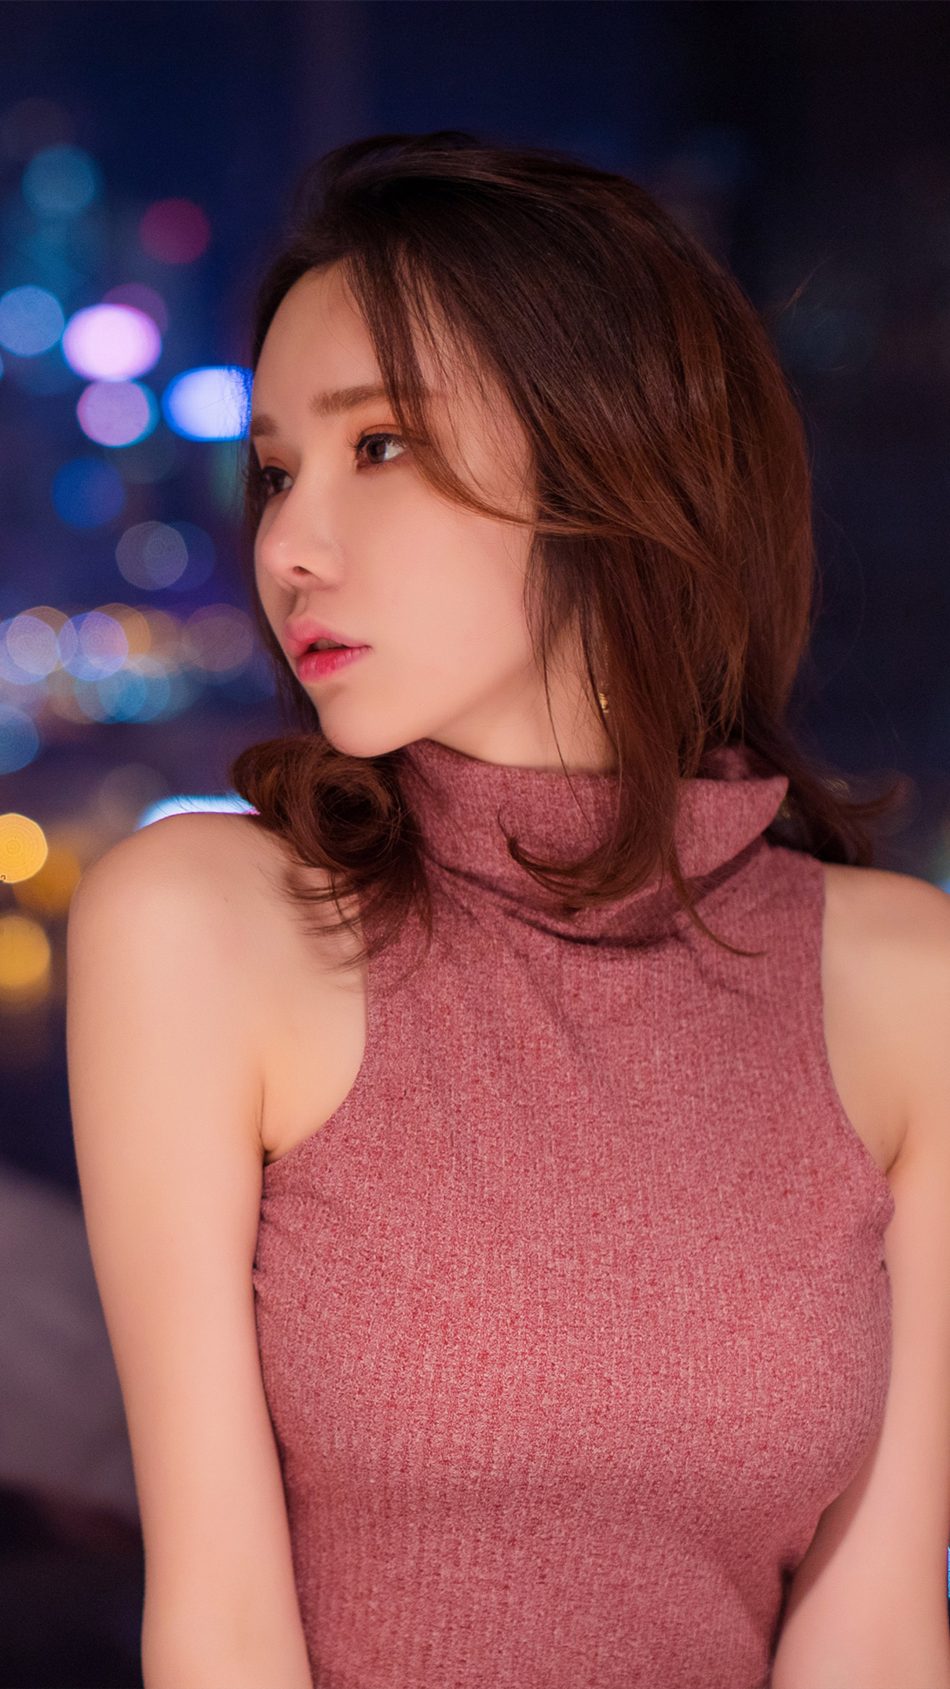 Cute Asian Girl City Background Photoshoot 4K Ultra HD Mobile Wallpaper